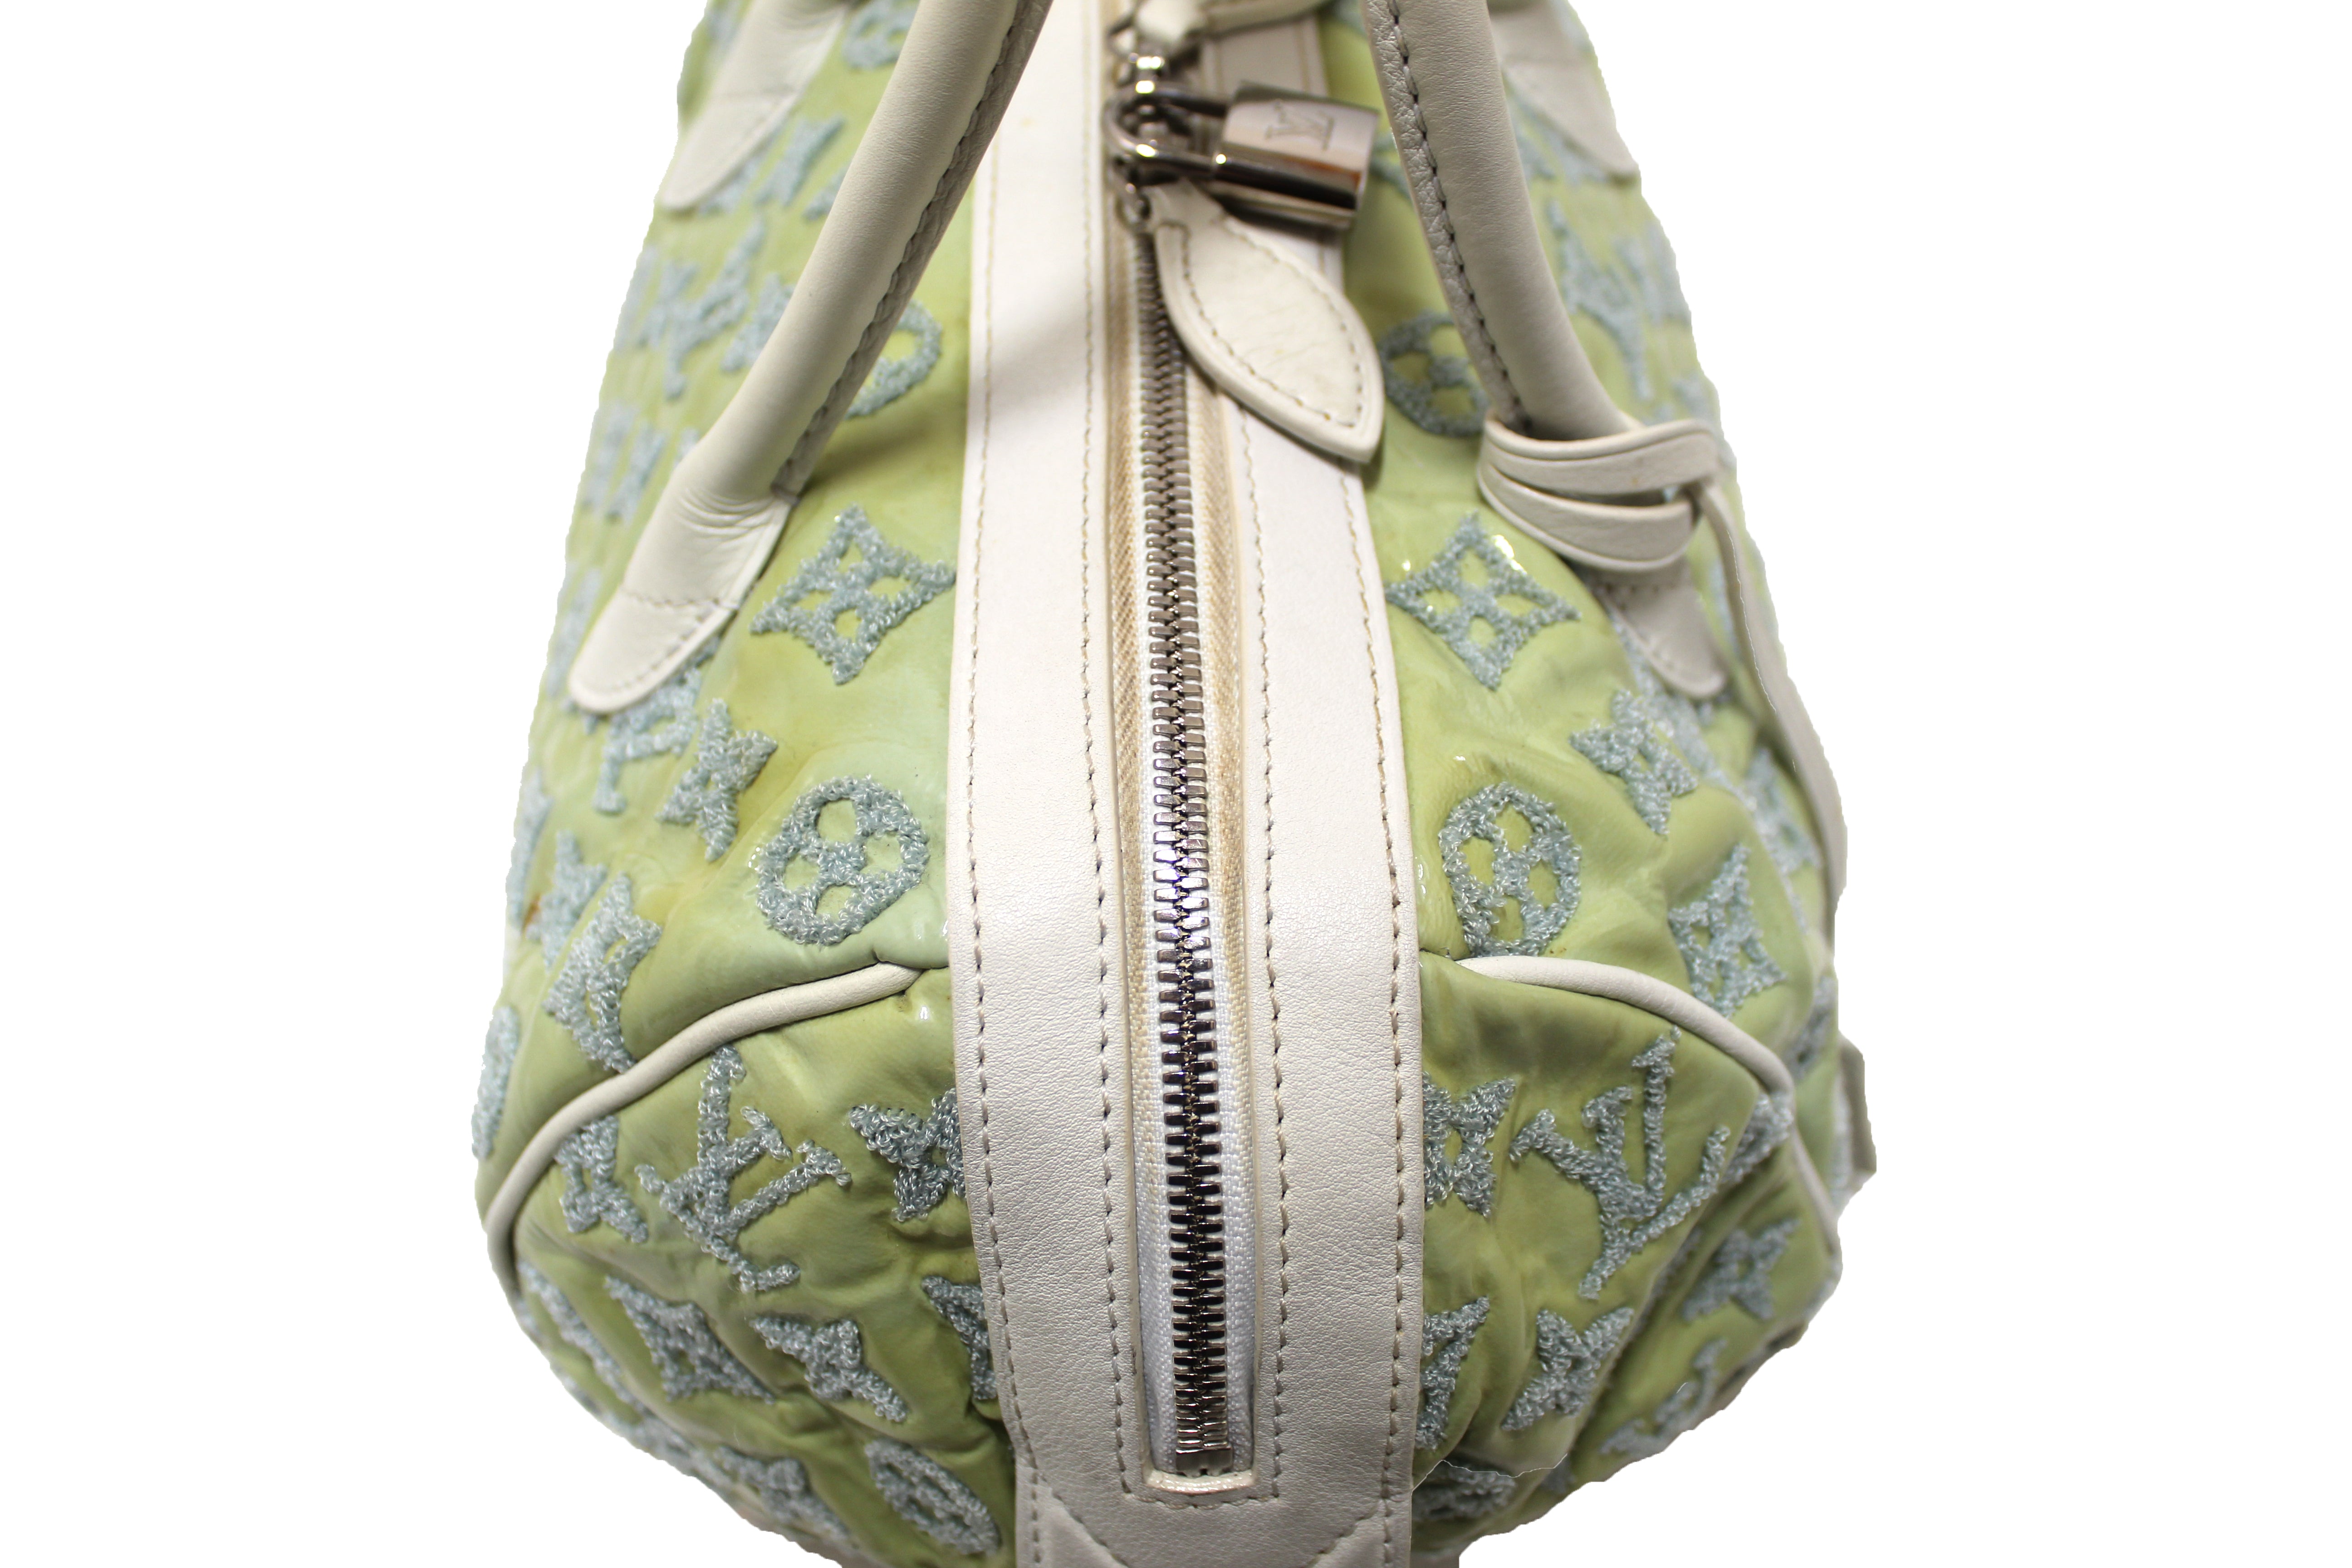 Authentic 2012 Limited Edition Louis Vuitton Green Monogram Sorbet Speedy Handbag